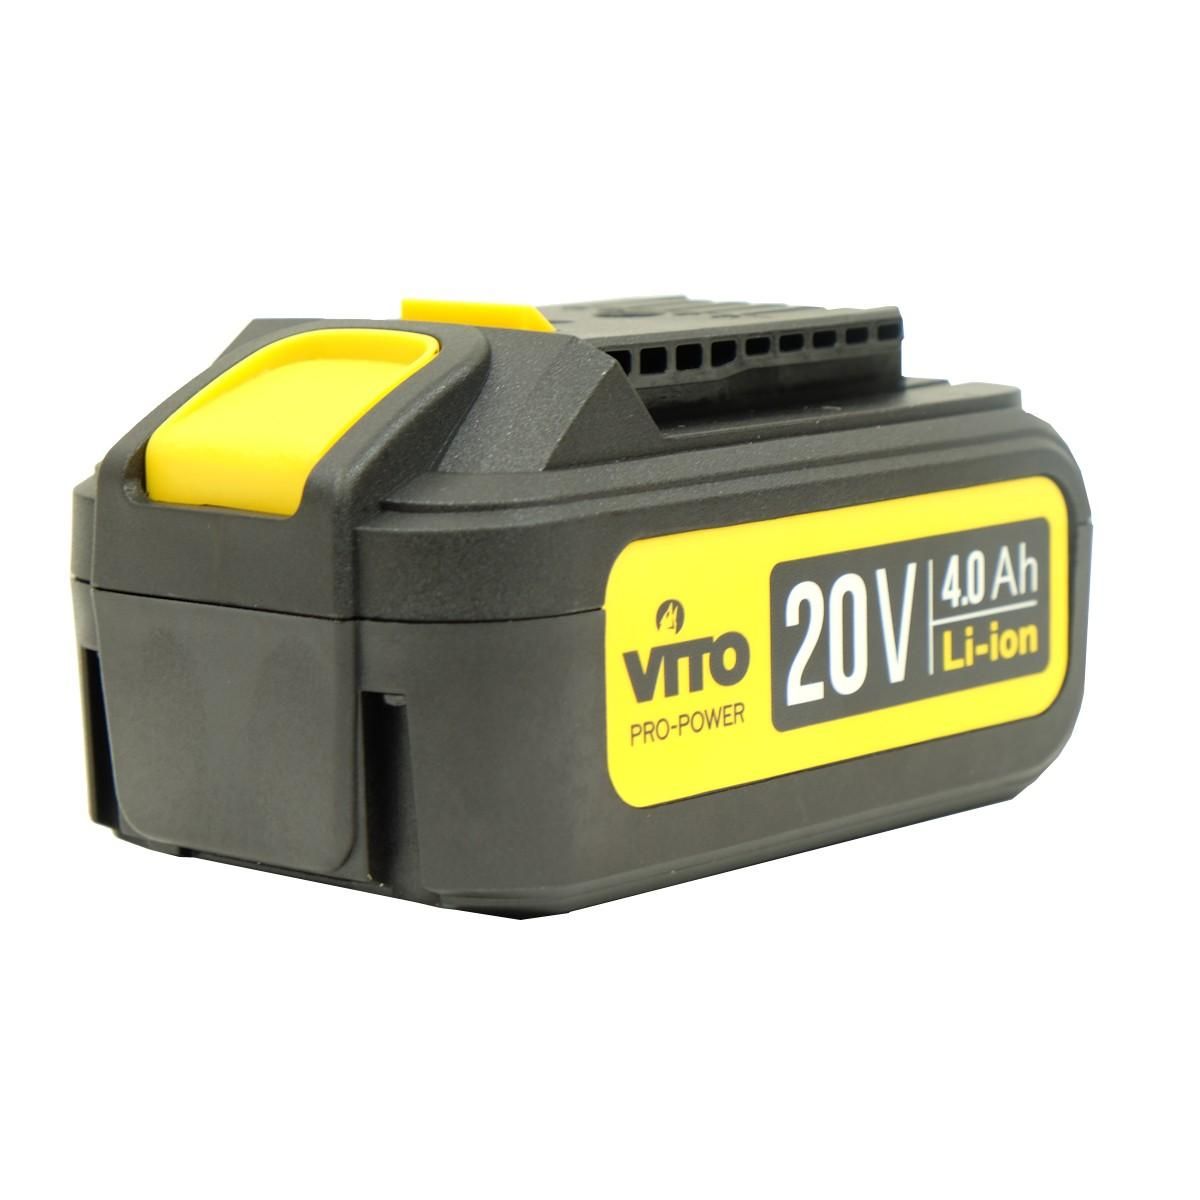 VITO Pro-Power Batterie 4 Ah Gamme EGO VITOPOWER sans fil 20 V Lithium